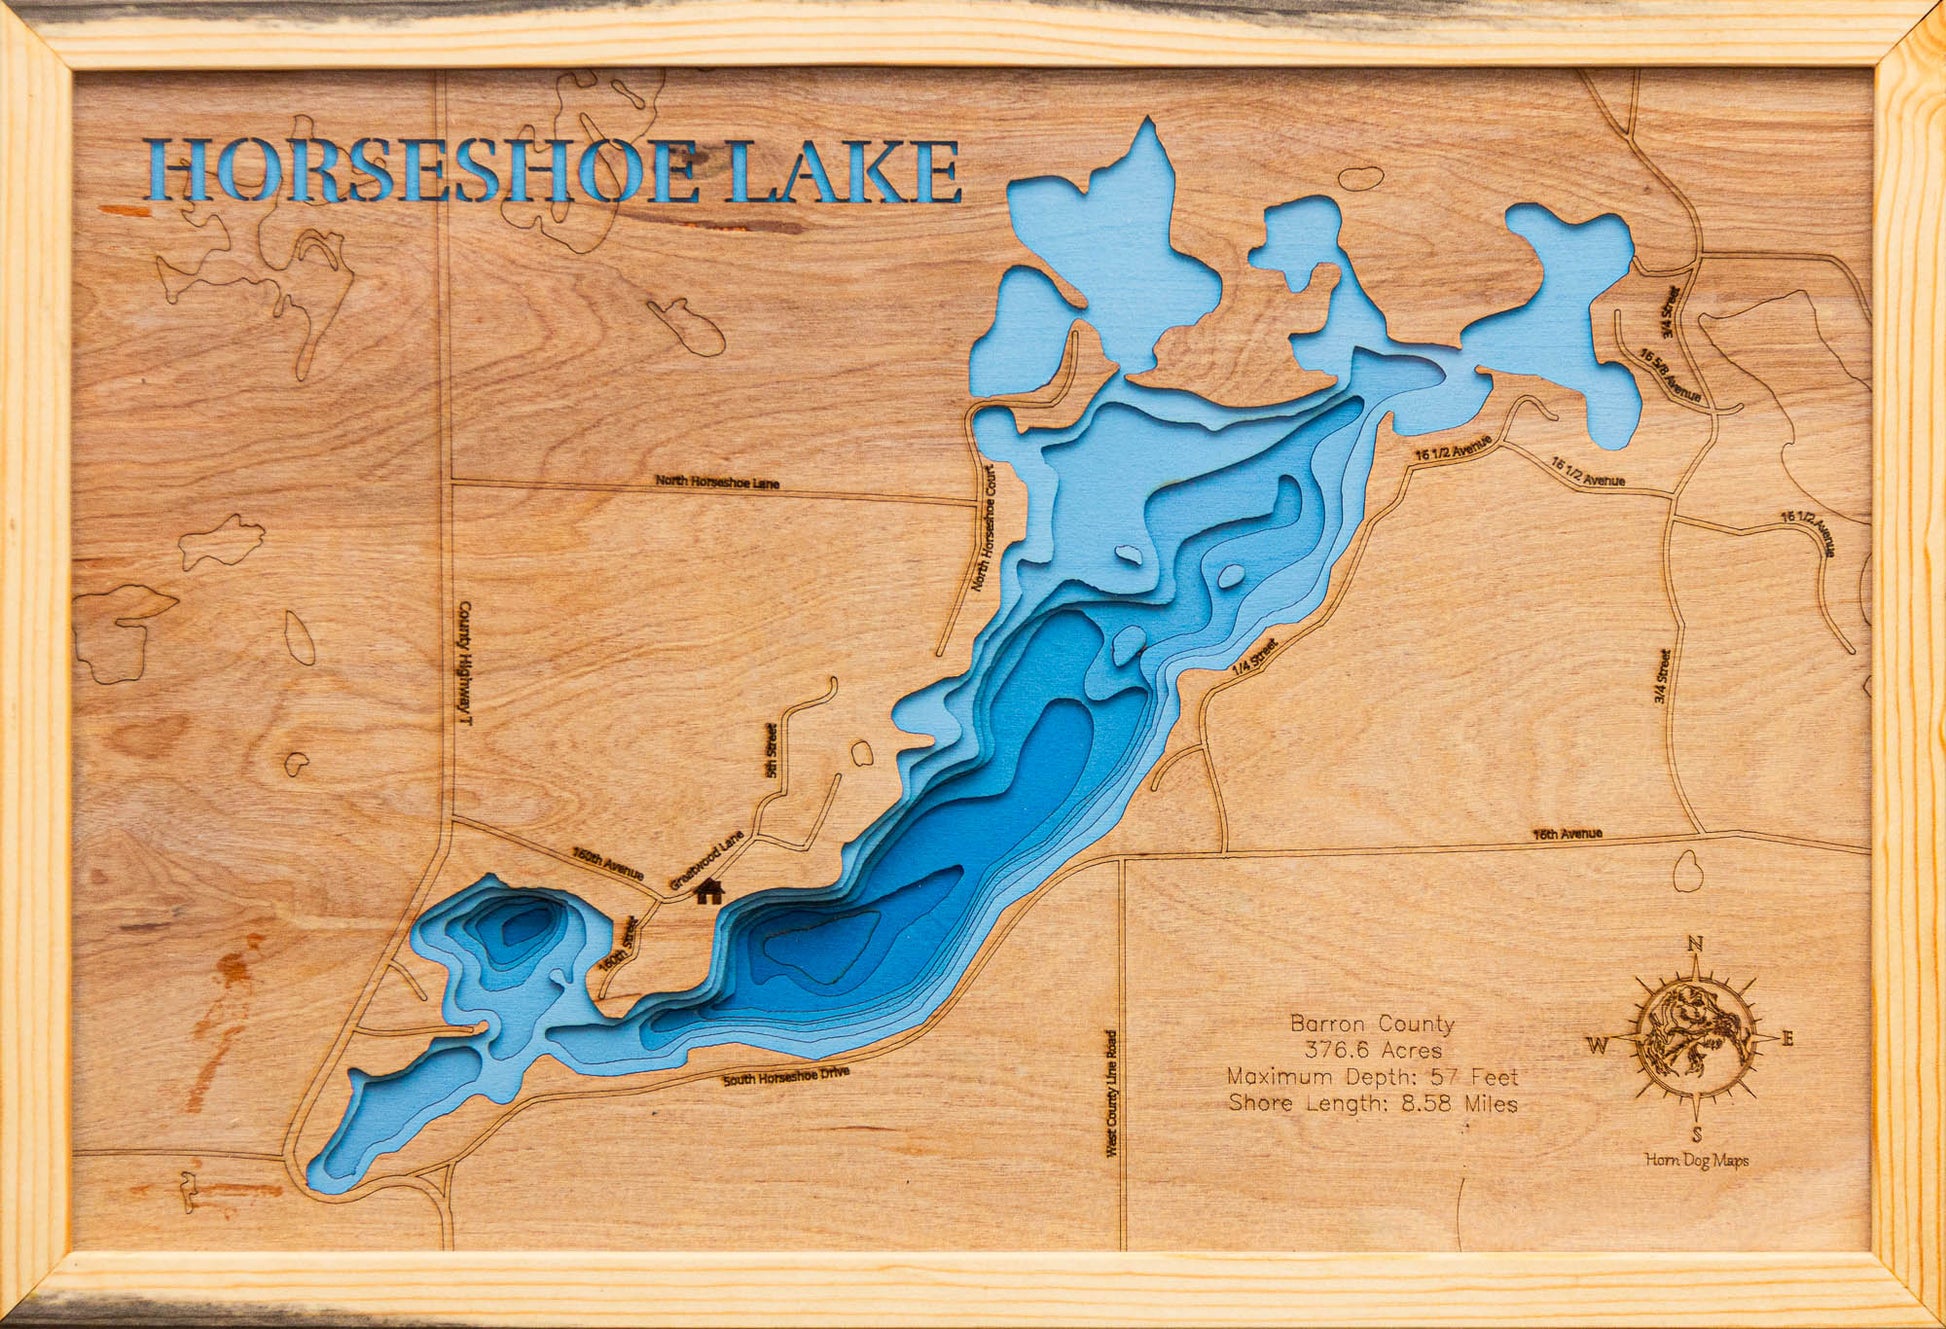 Horseshoe Lake in Barron County, WI